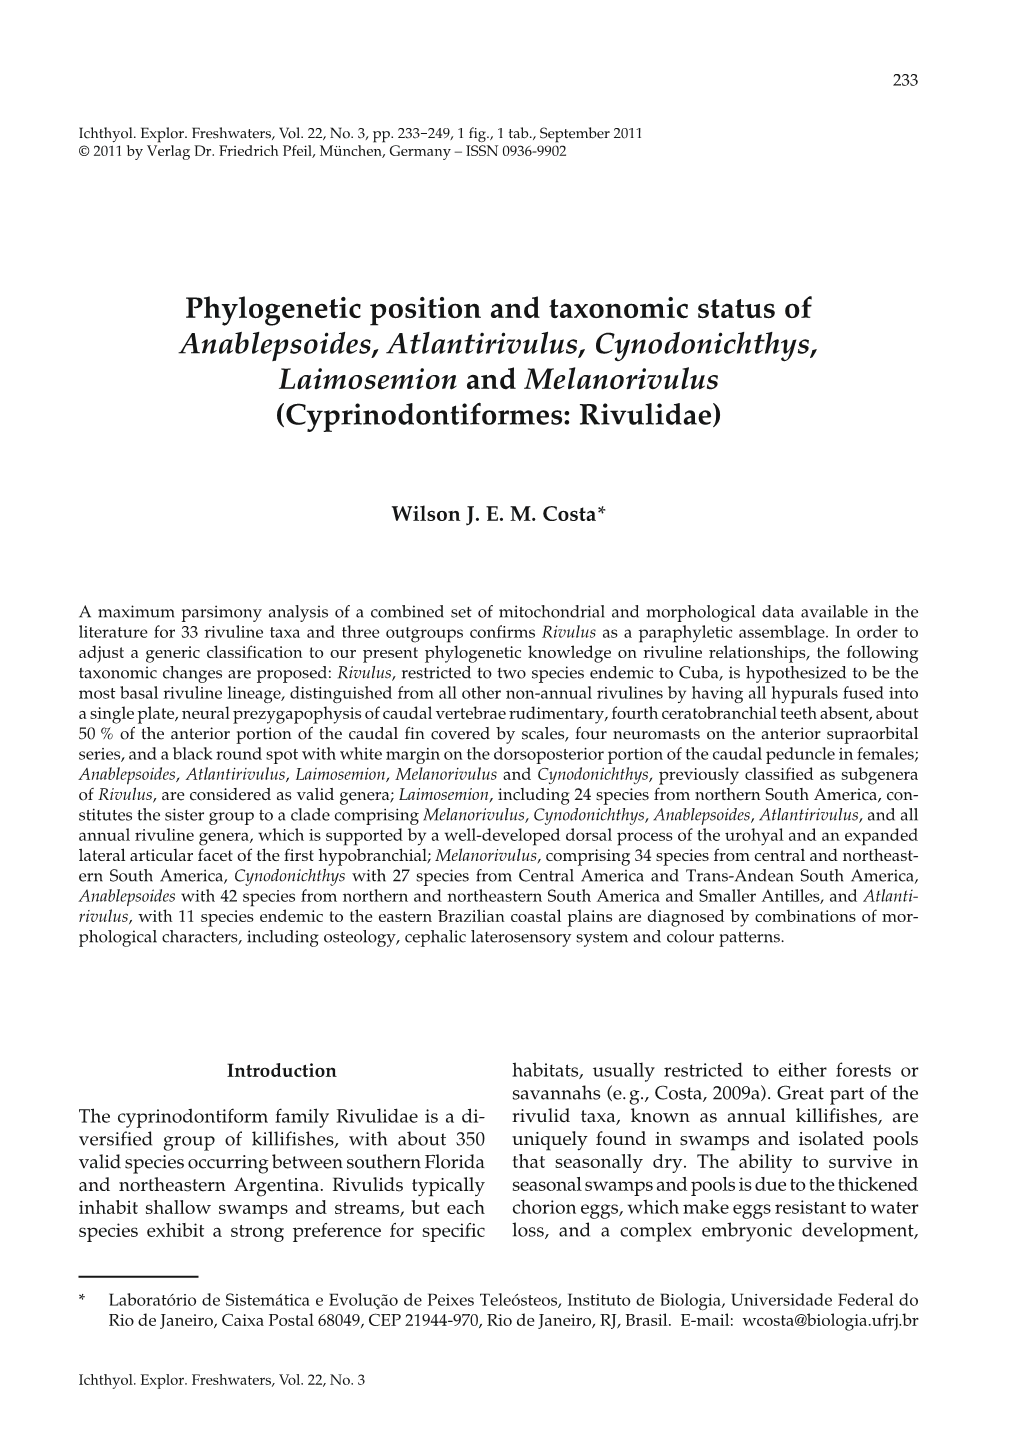 Phylogenetic Position and Taxonomic Status of Anablepsoides, Atlantirivulus, Cynodonichthys, Laimosemion and Melanorivulus (Cyprinodontiformes: Rivulidae)